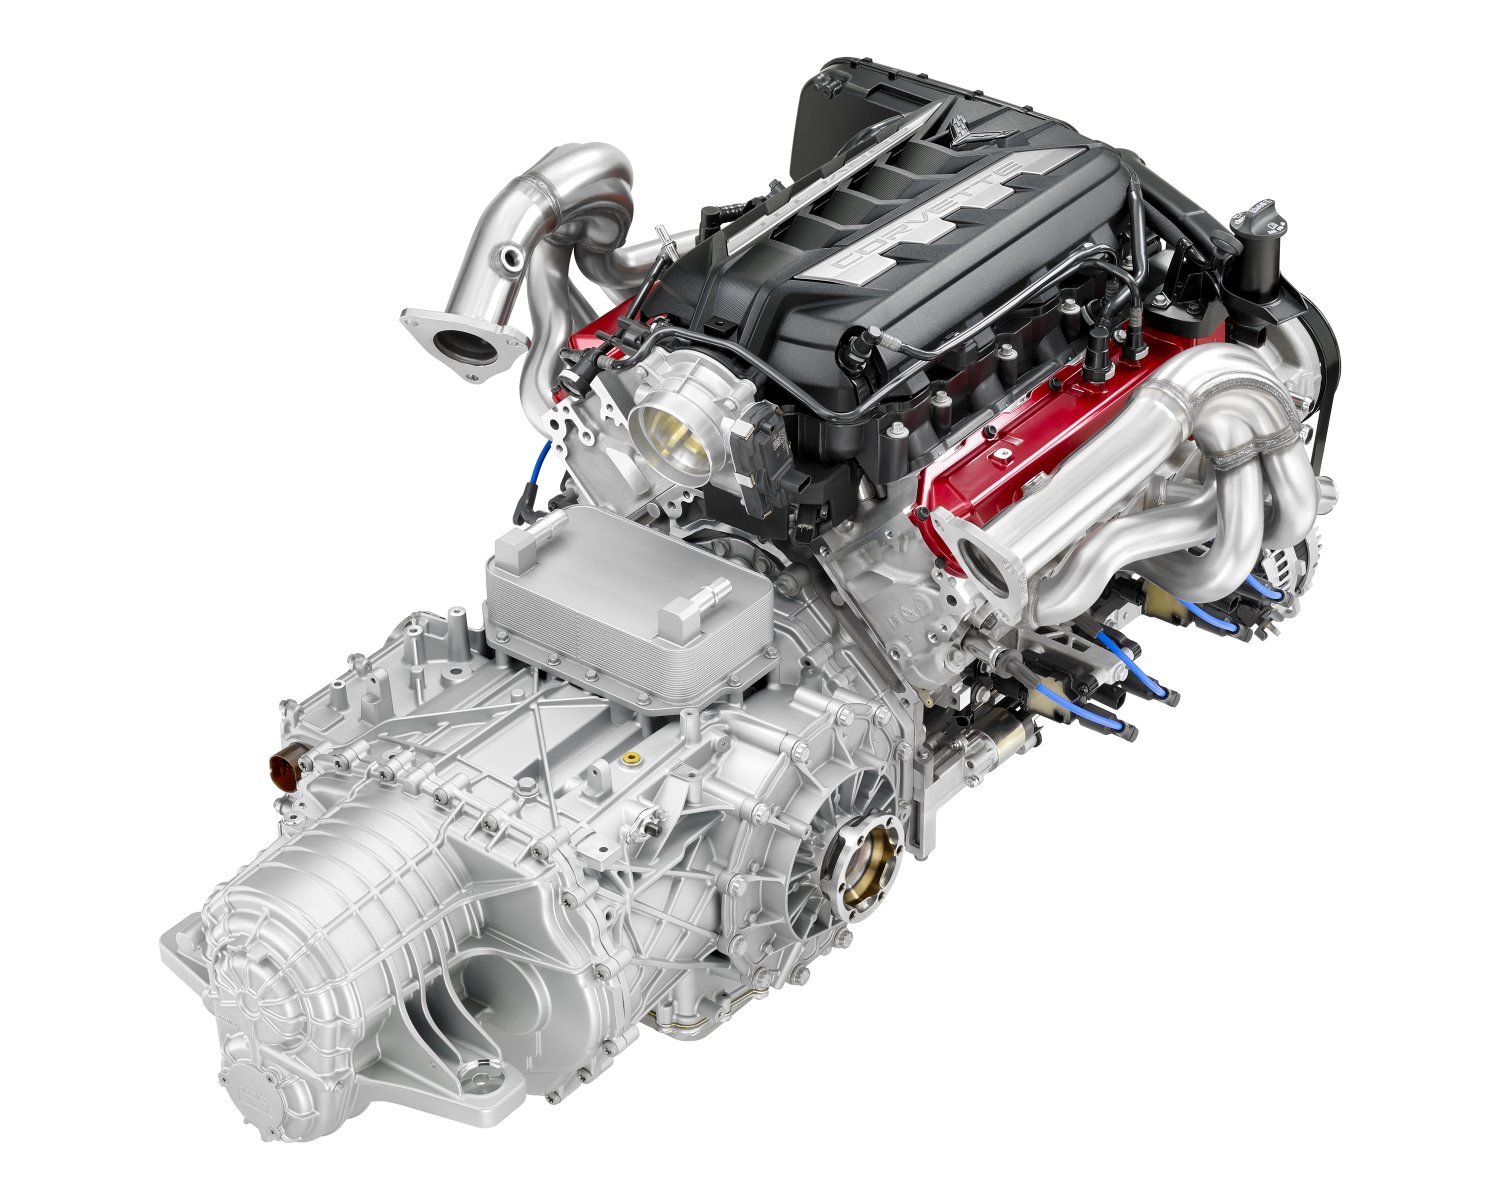 LT2 engine and dual-clutch transmission